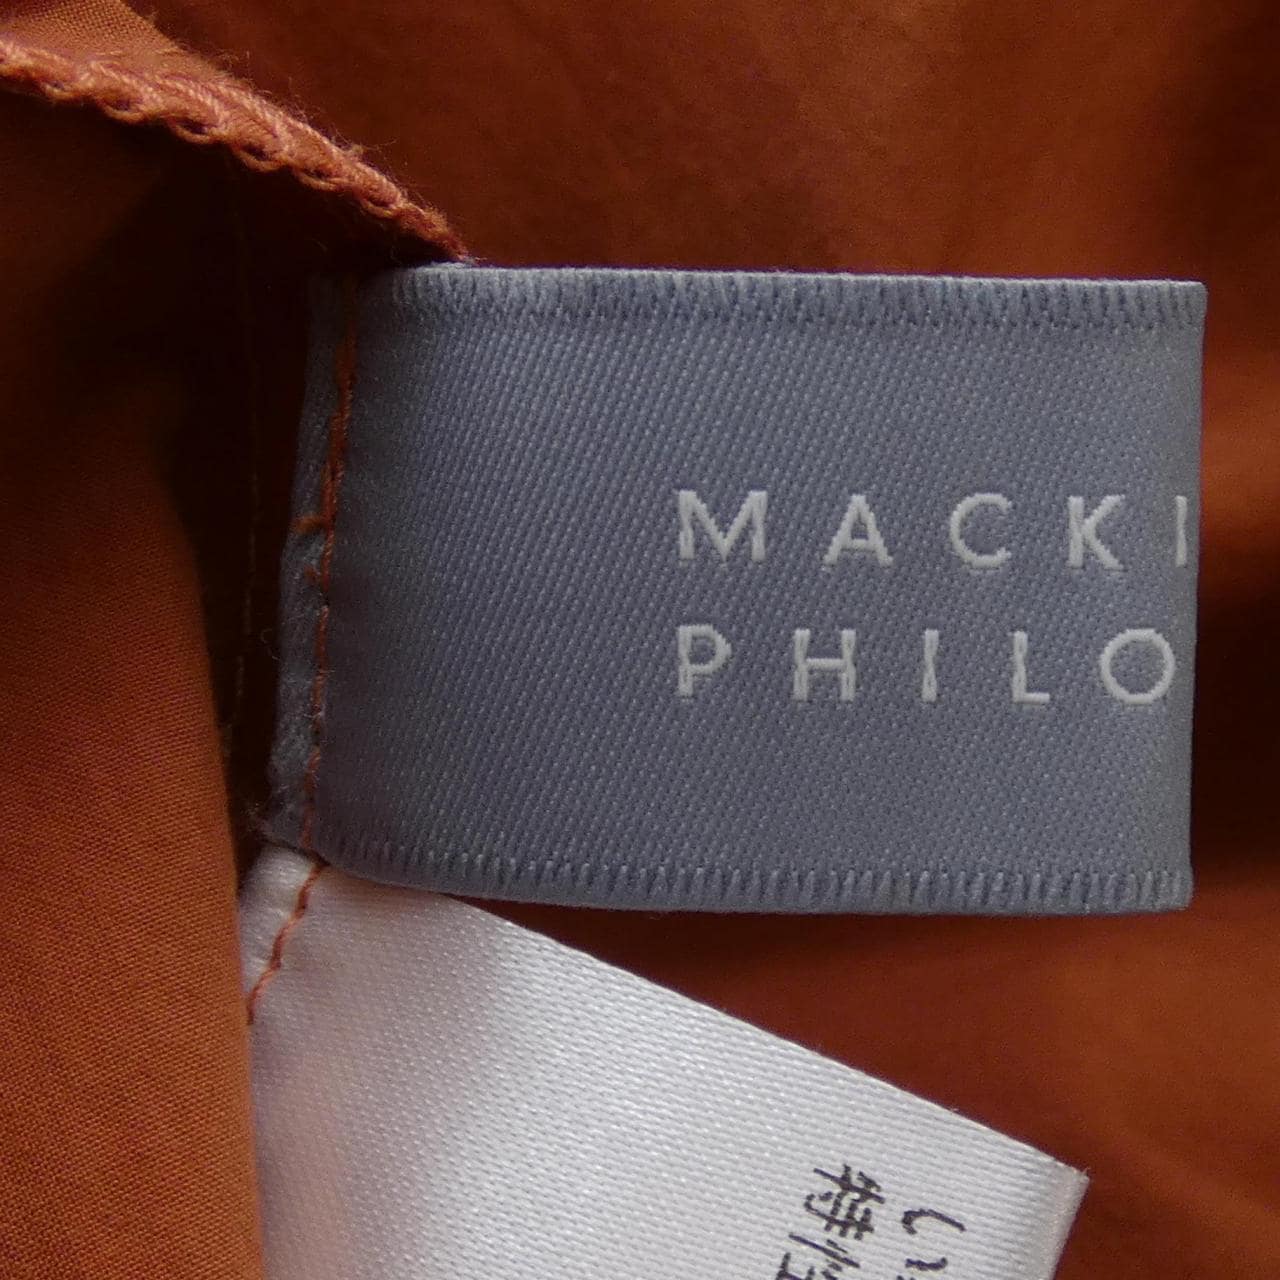 Mackintosh Philosophy MACKINTOSH PHILOSOPH Dress